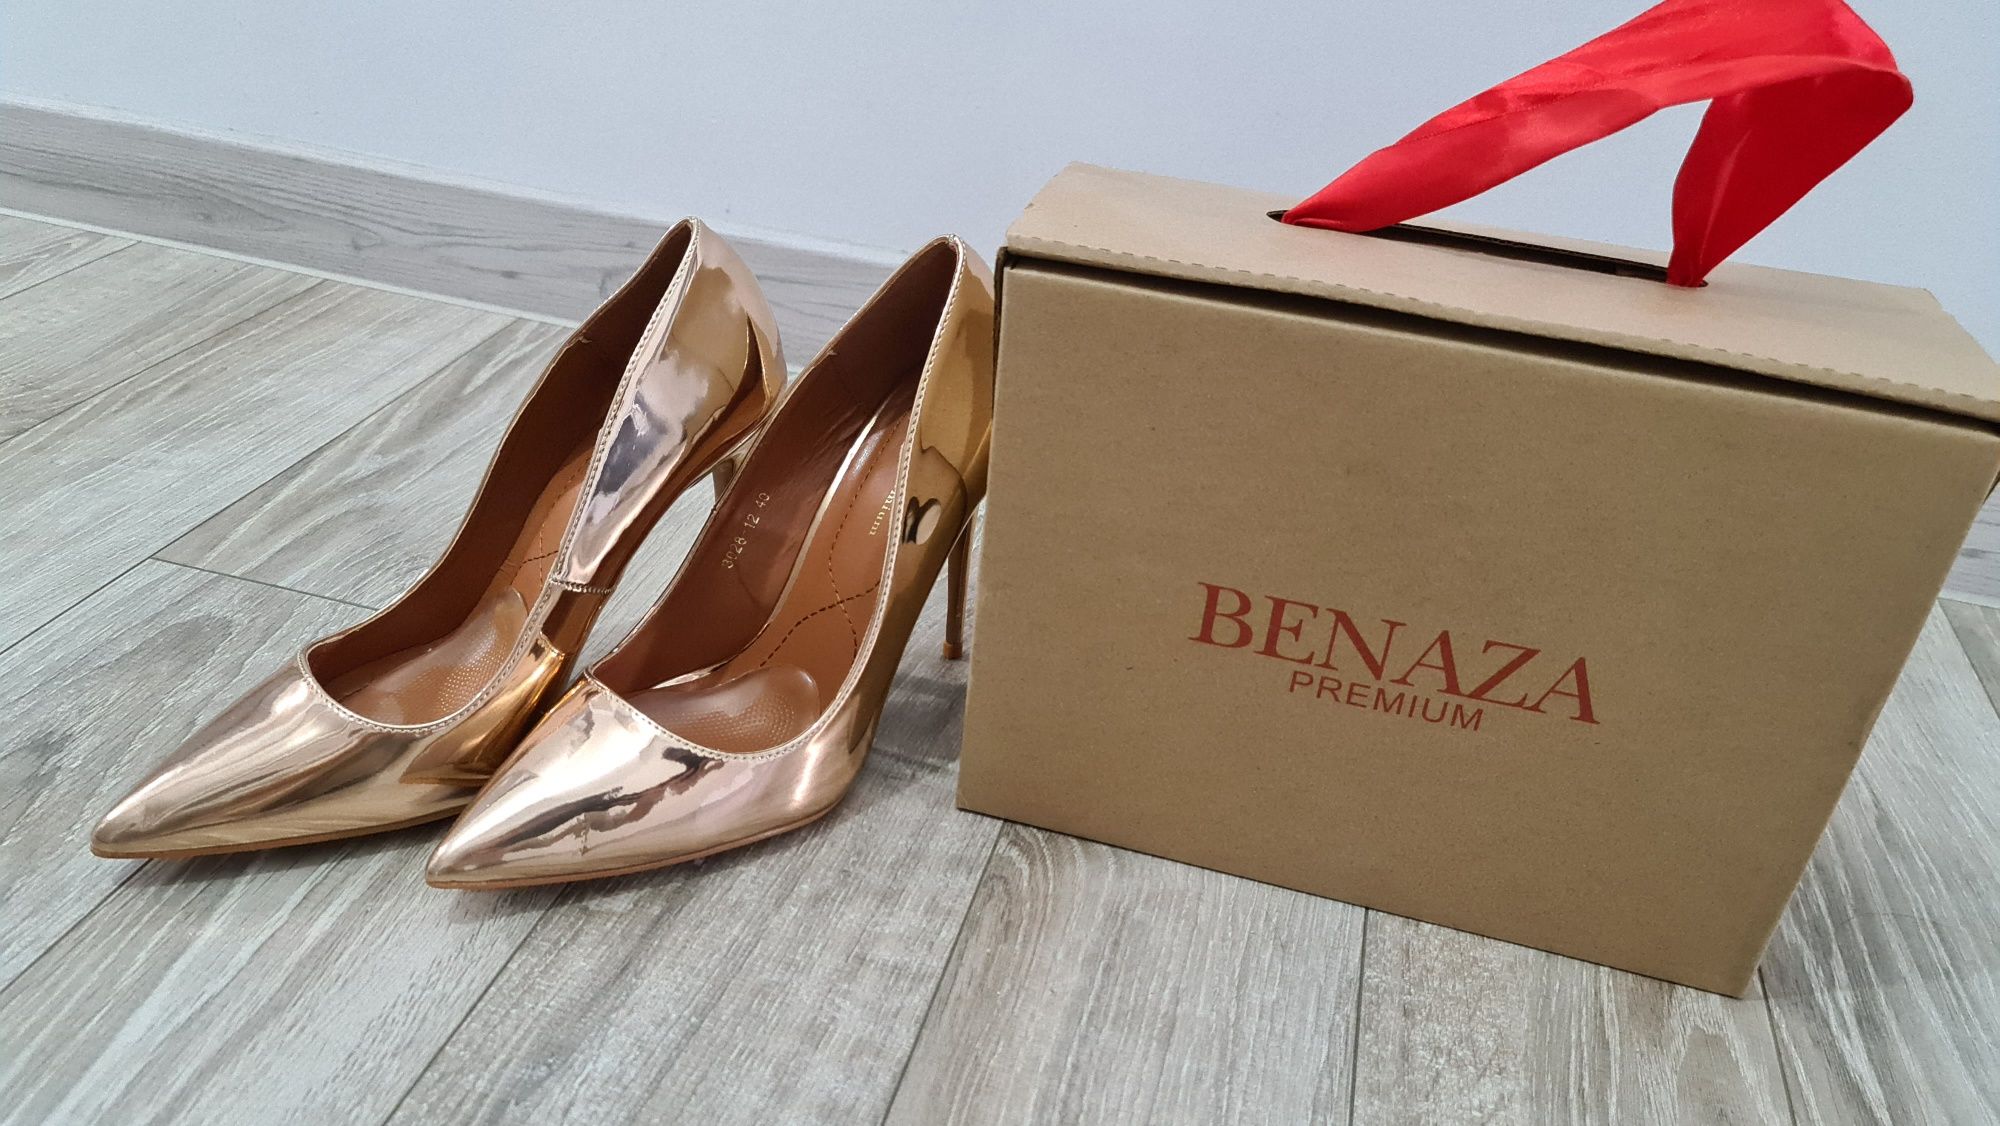 Pantofi aurii Benaza măsura 40